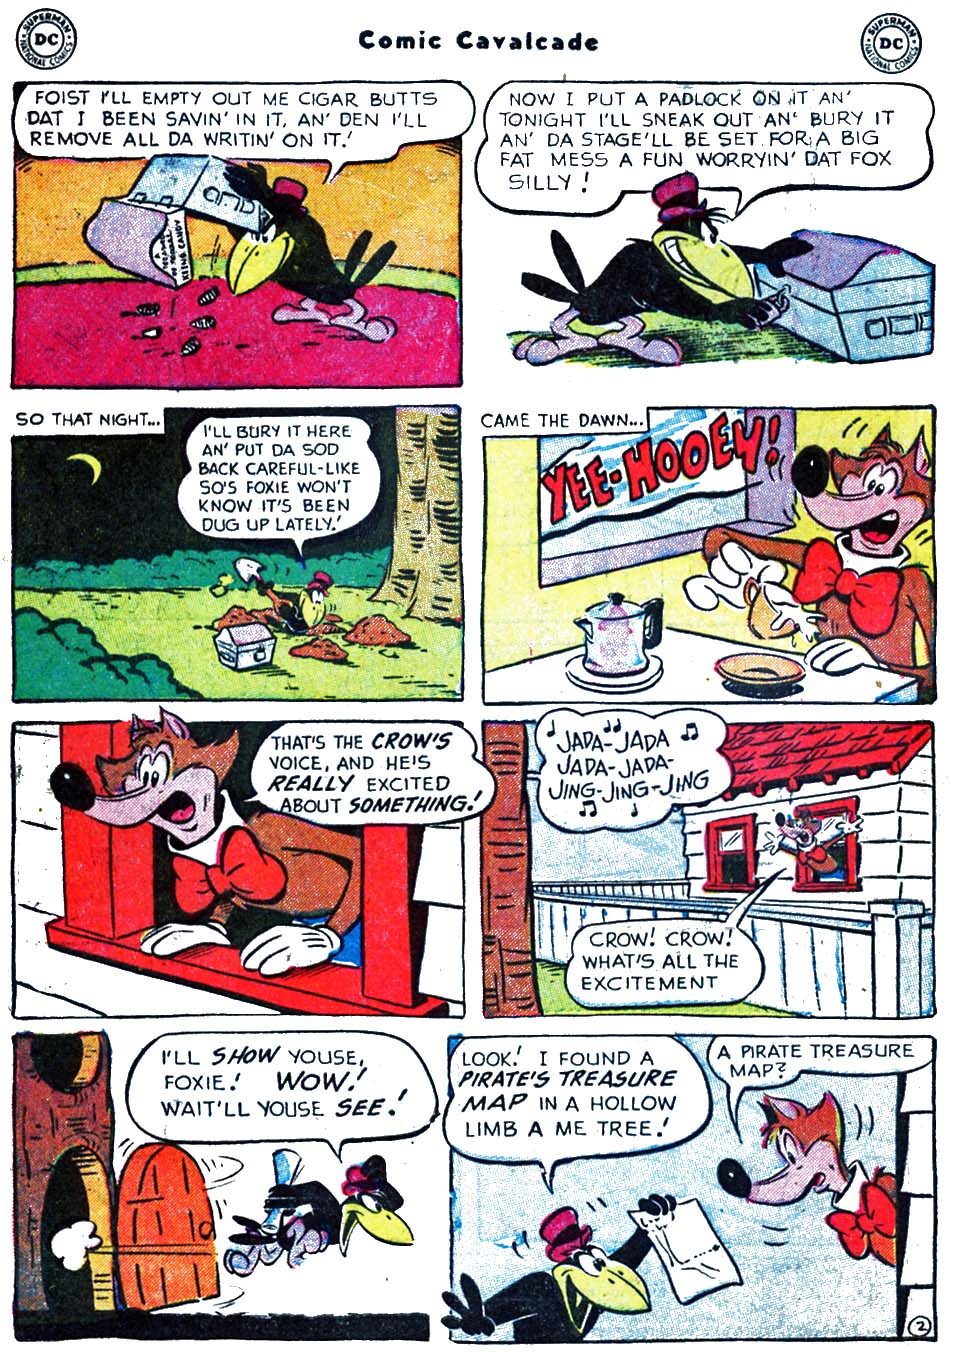 Comic Cavalcade issue 57 - Page 4